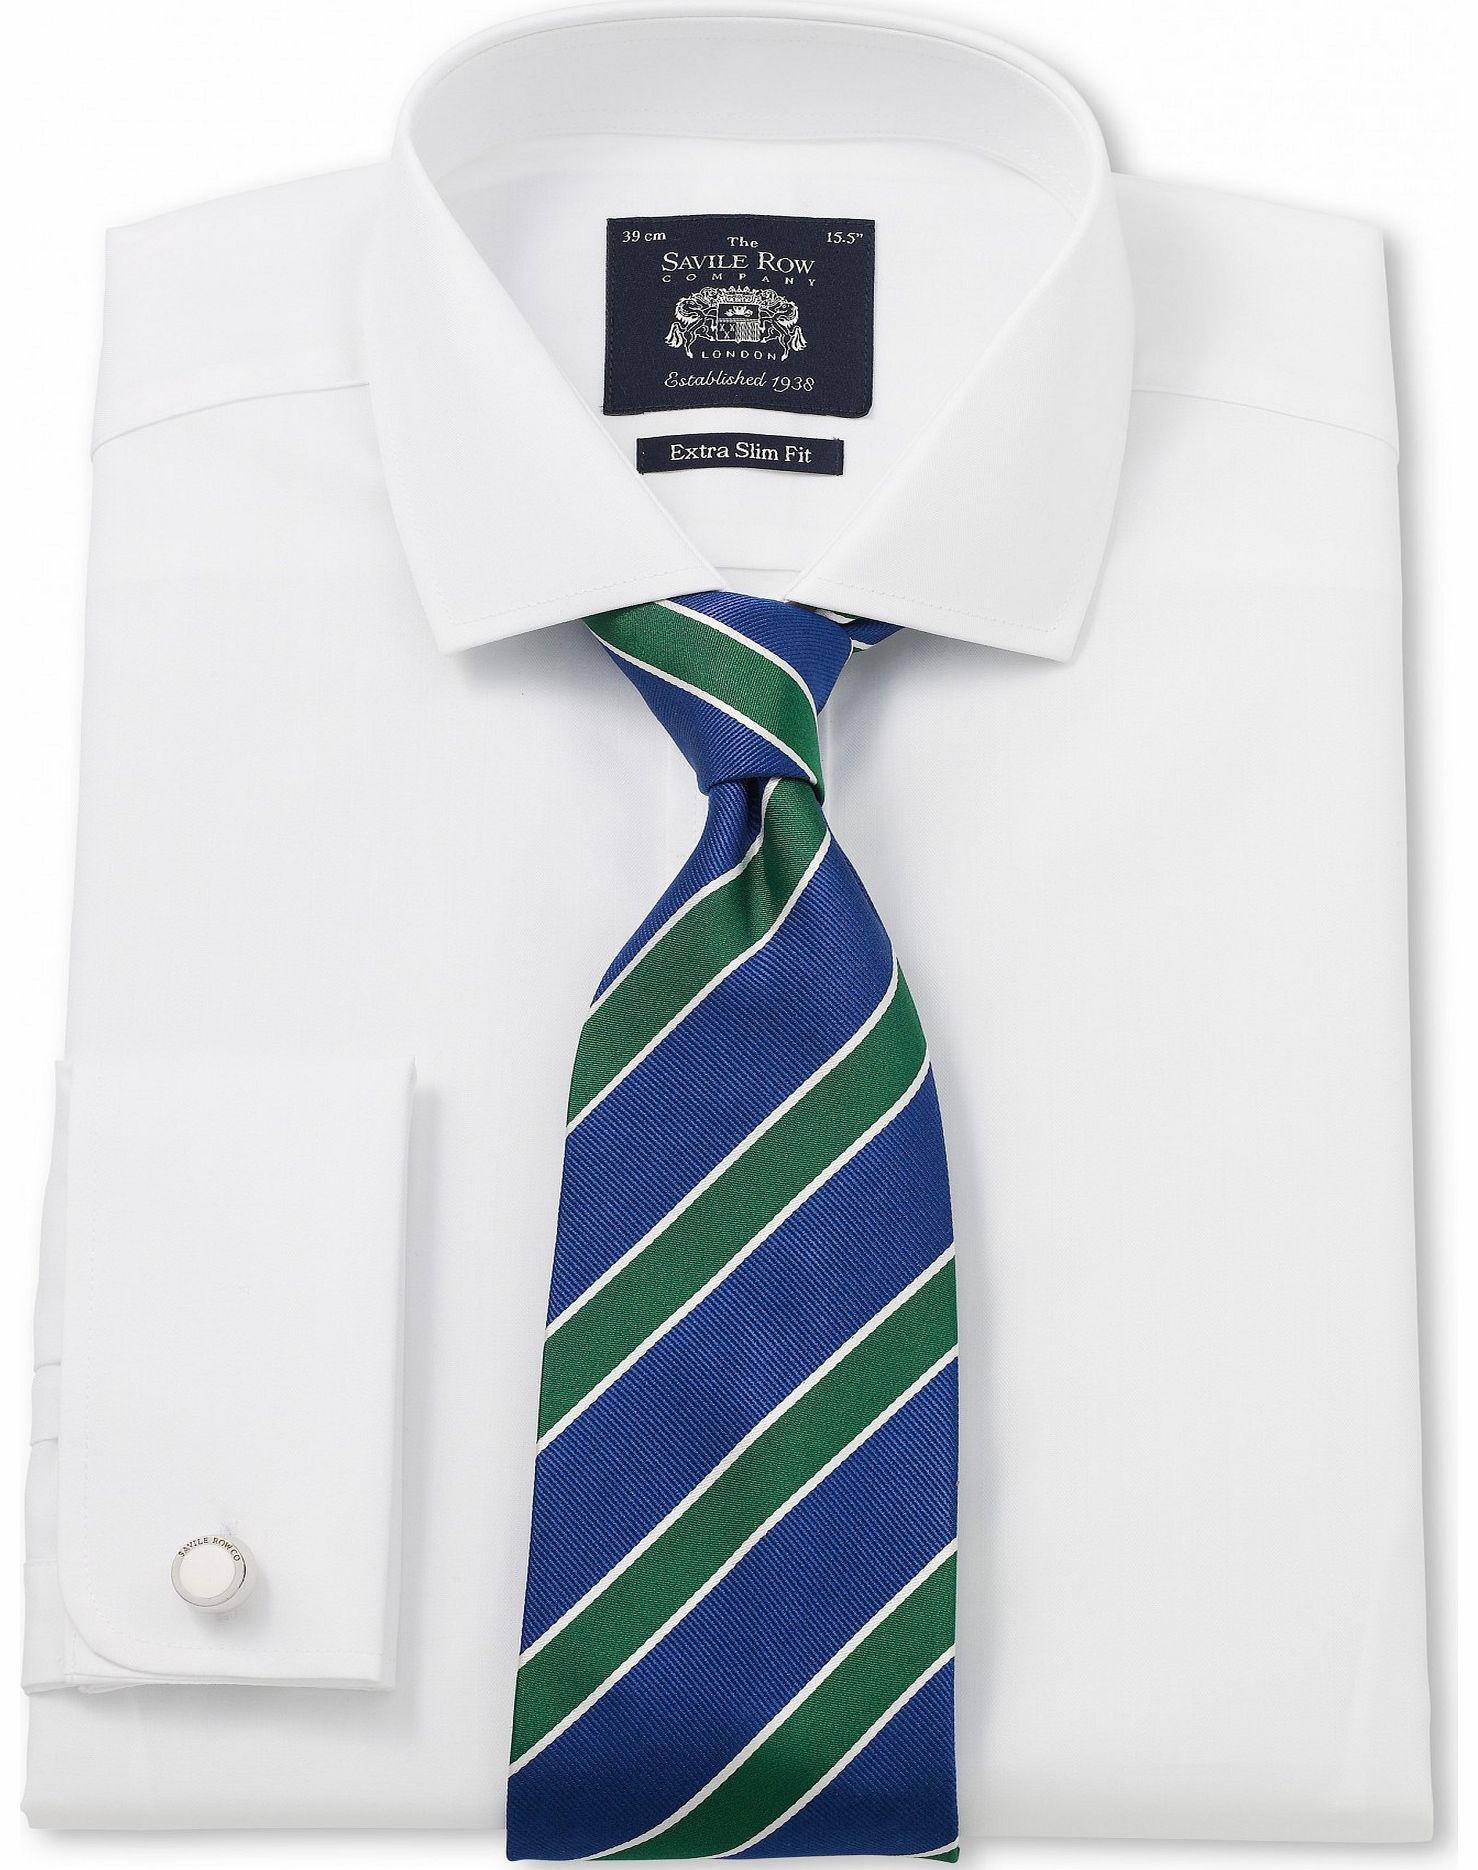 Savile Row Company White Luxury Herringbone Extra Slim Fit Shirt 14